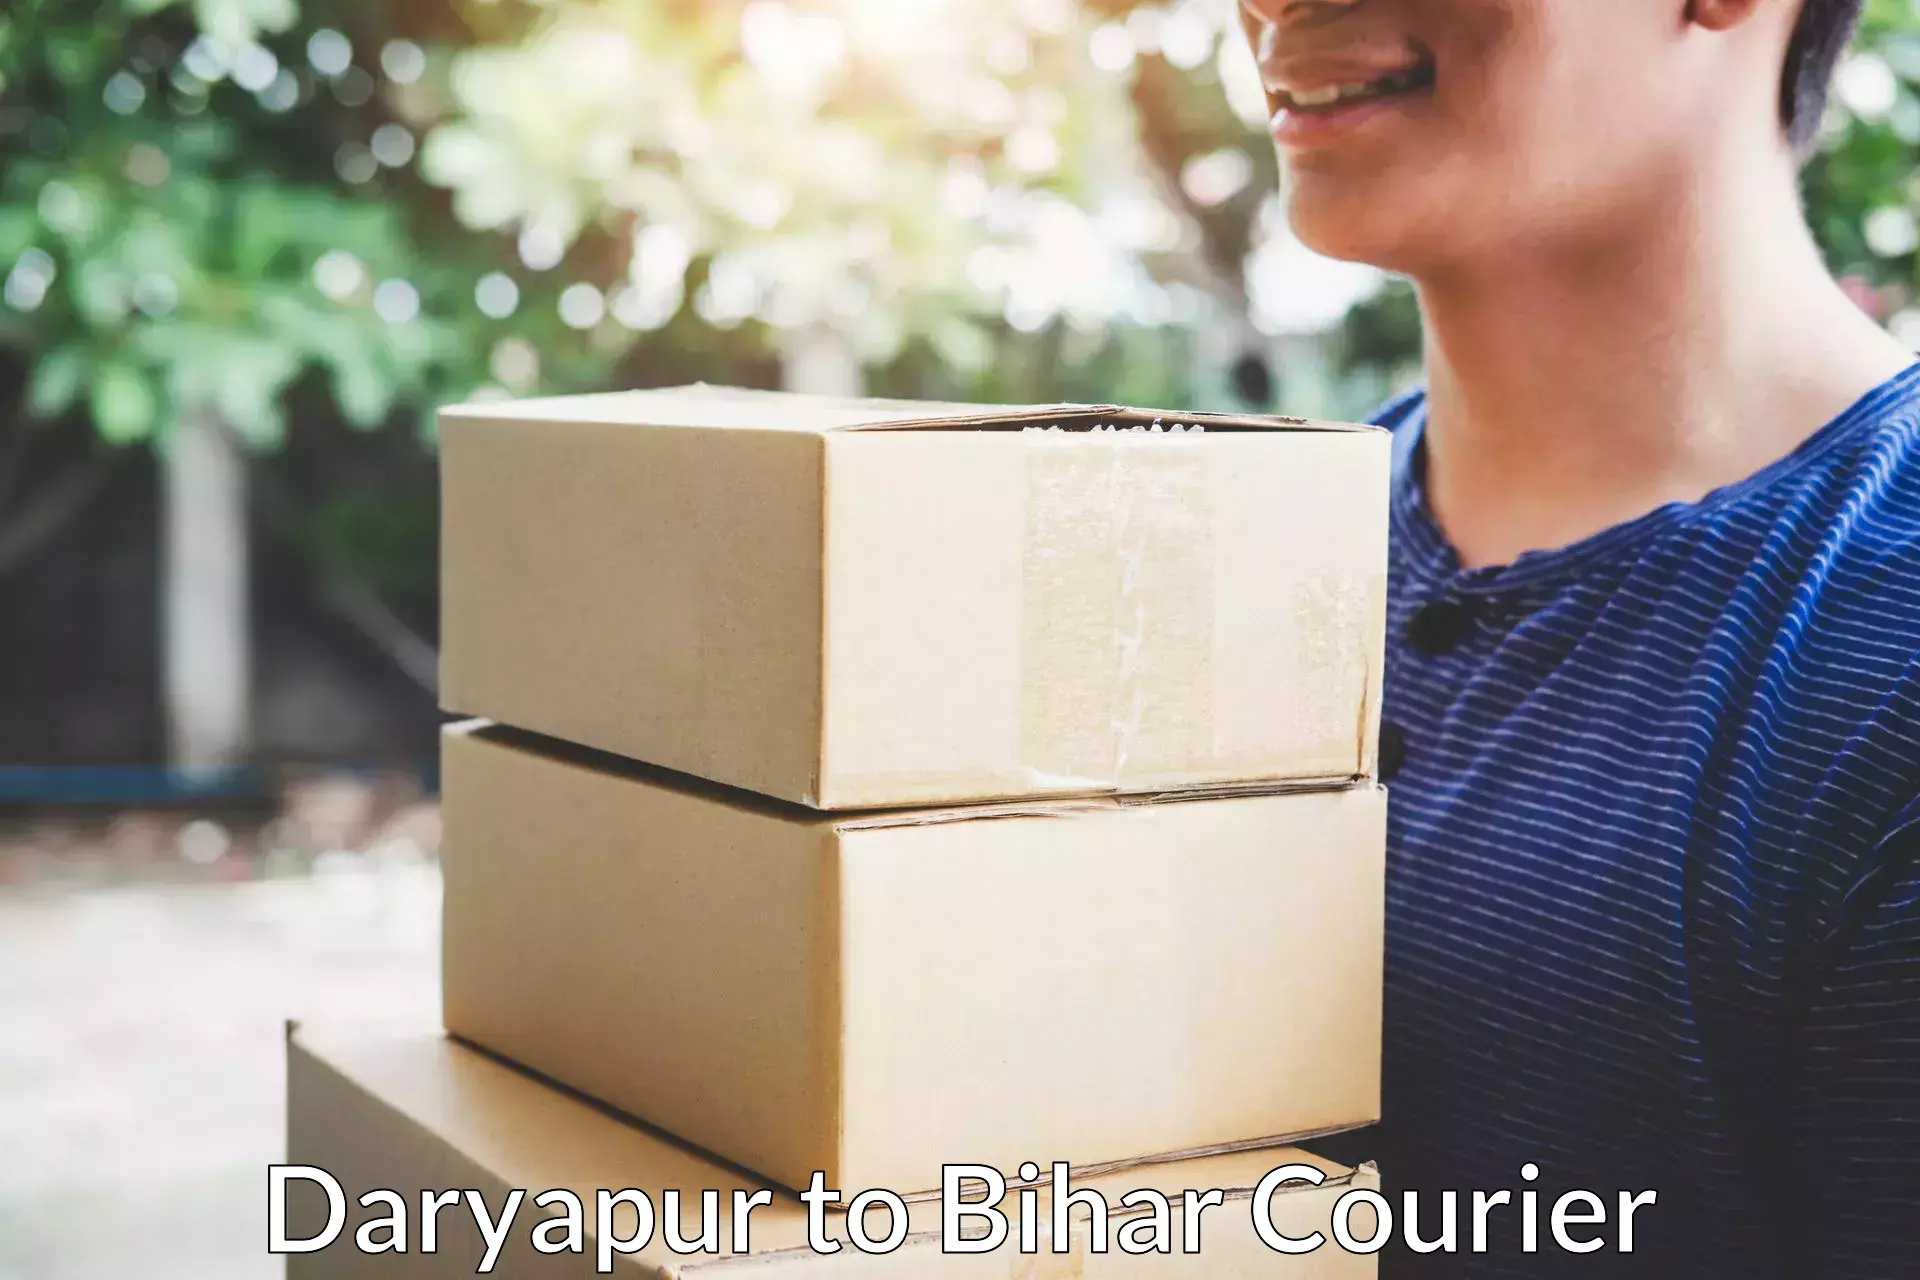 Professional moving company Daryapur to Bihar